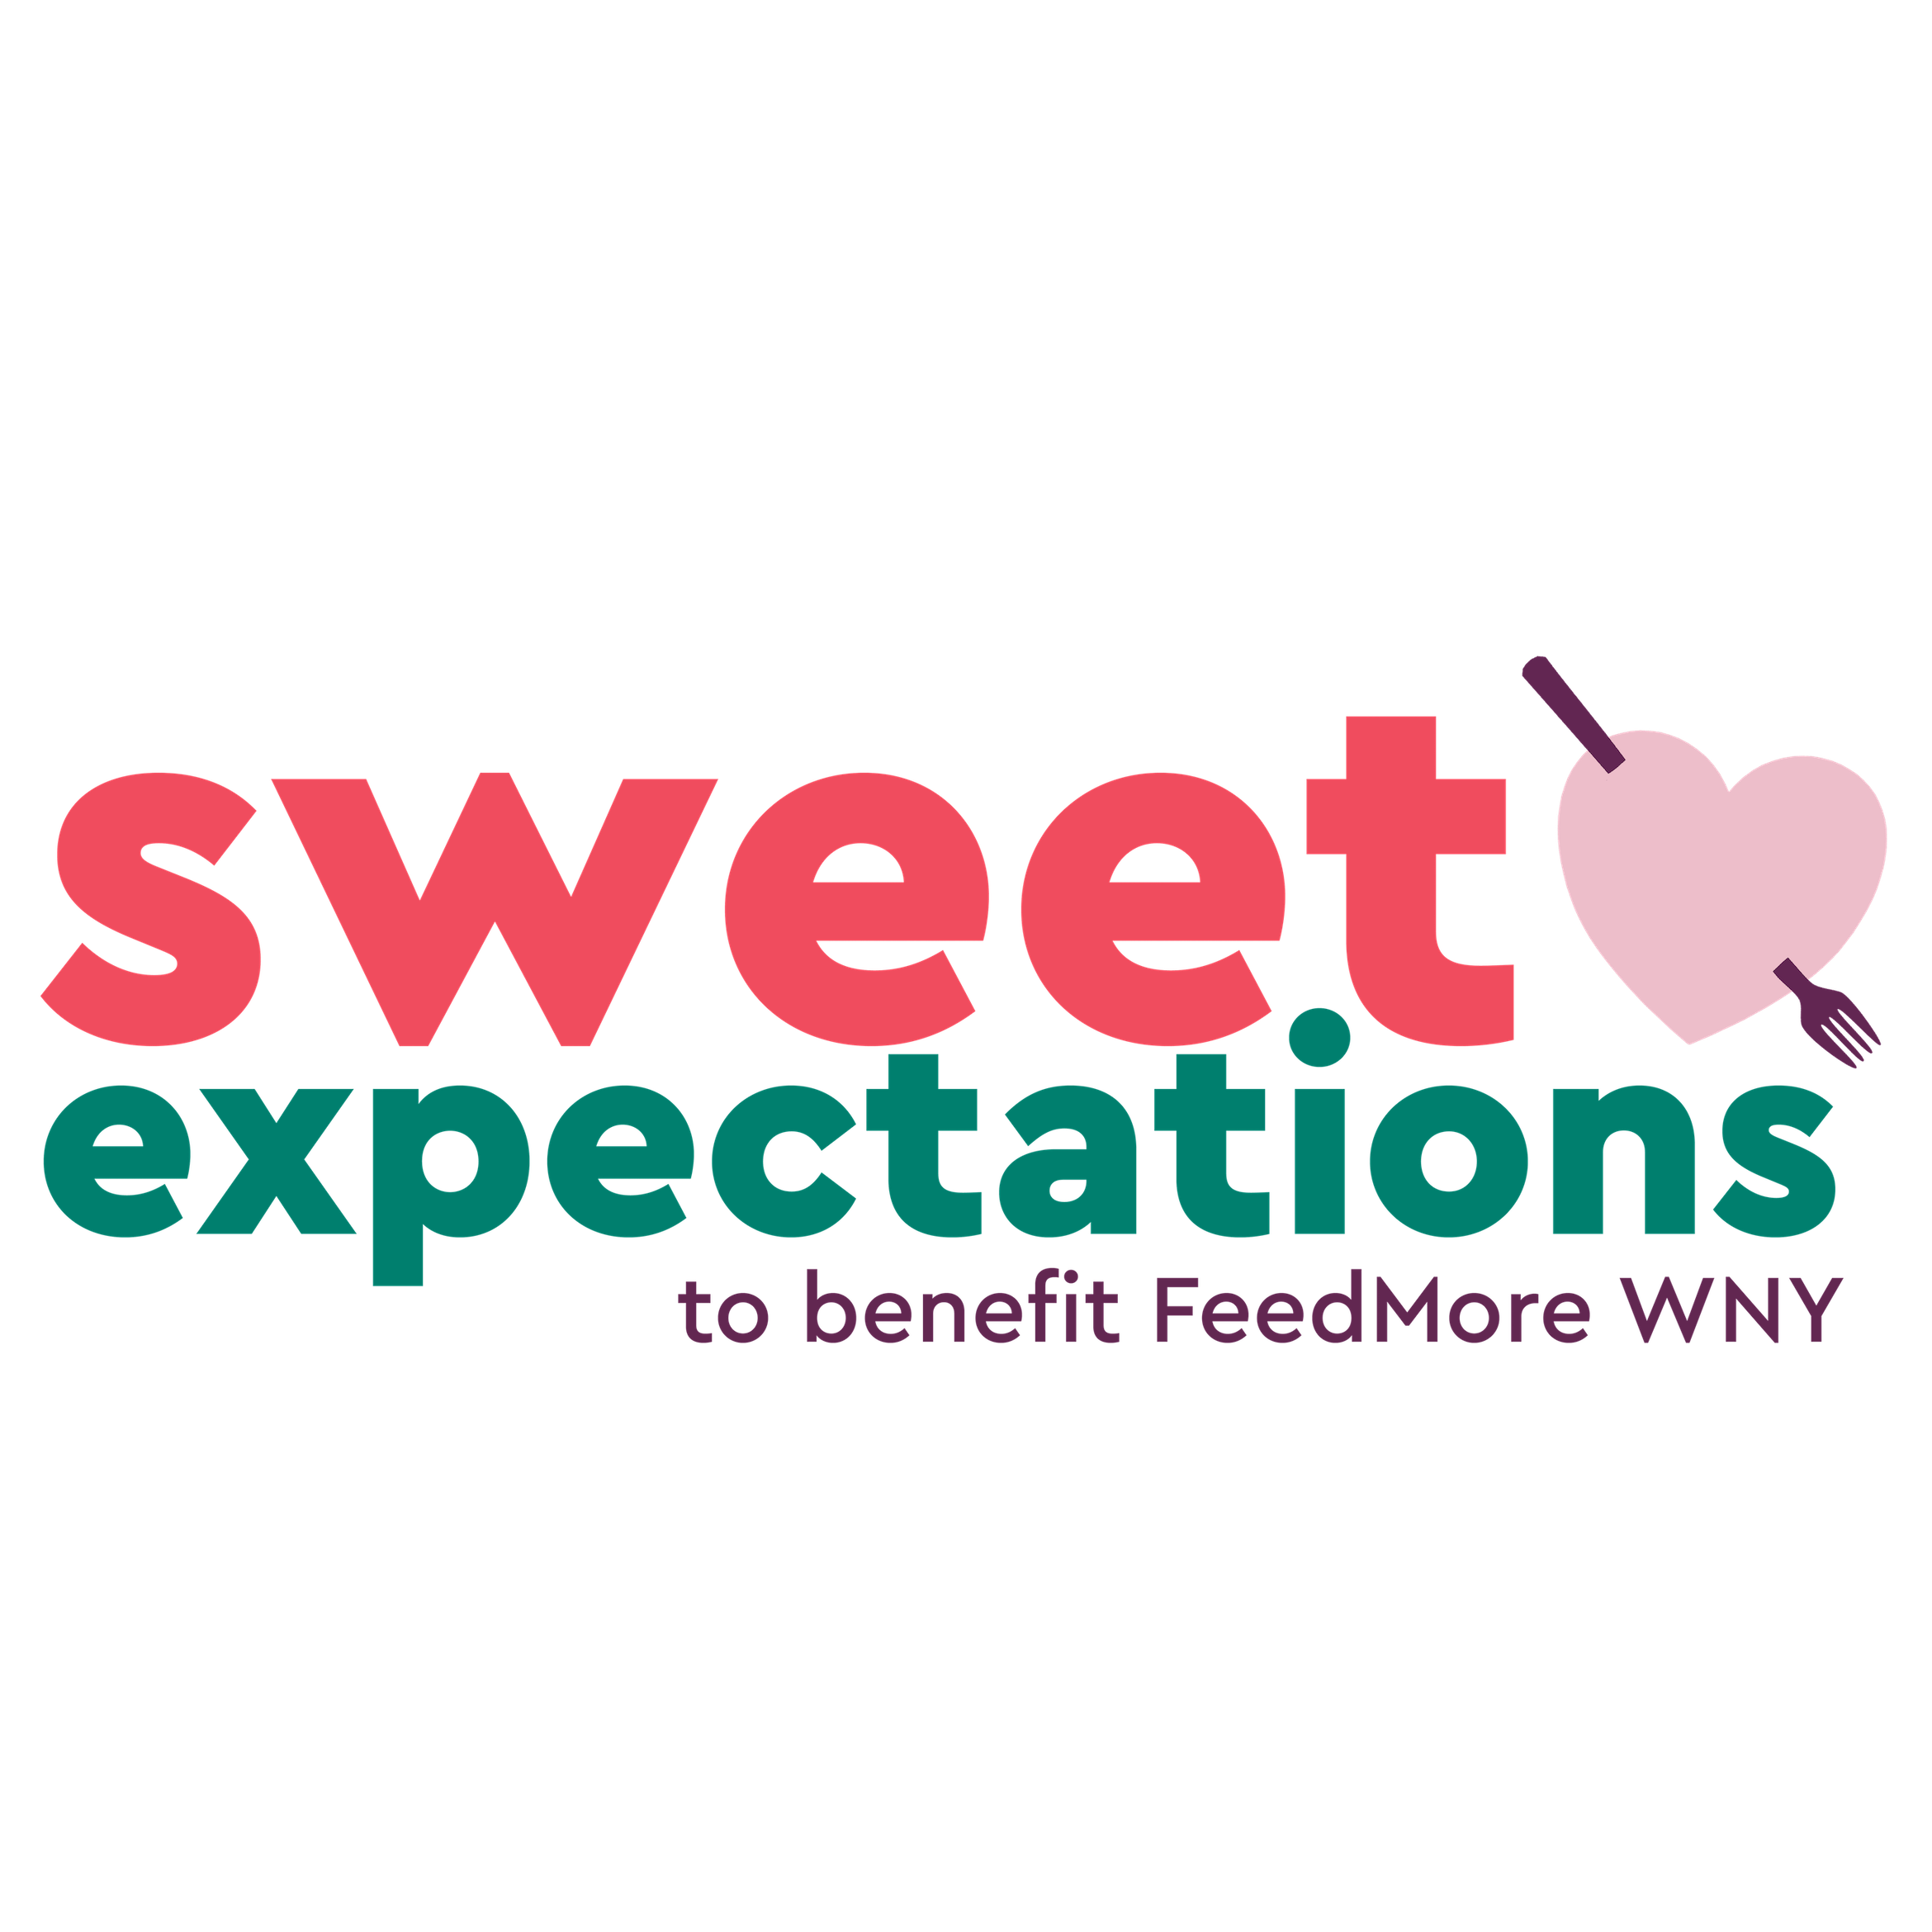 `Sweet Expectations` logo courtesy of FeedMore WNY. 